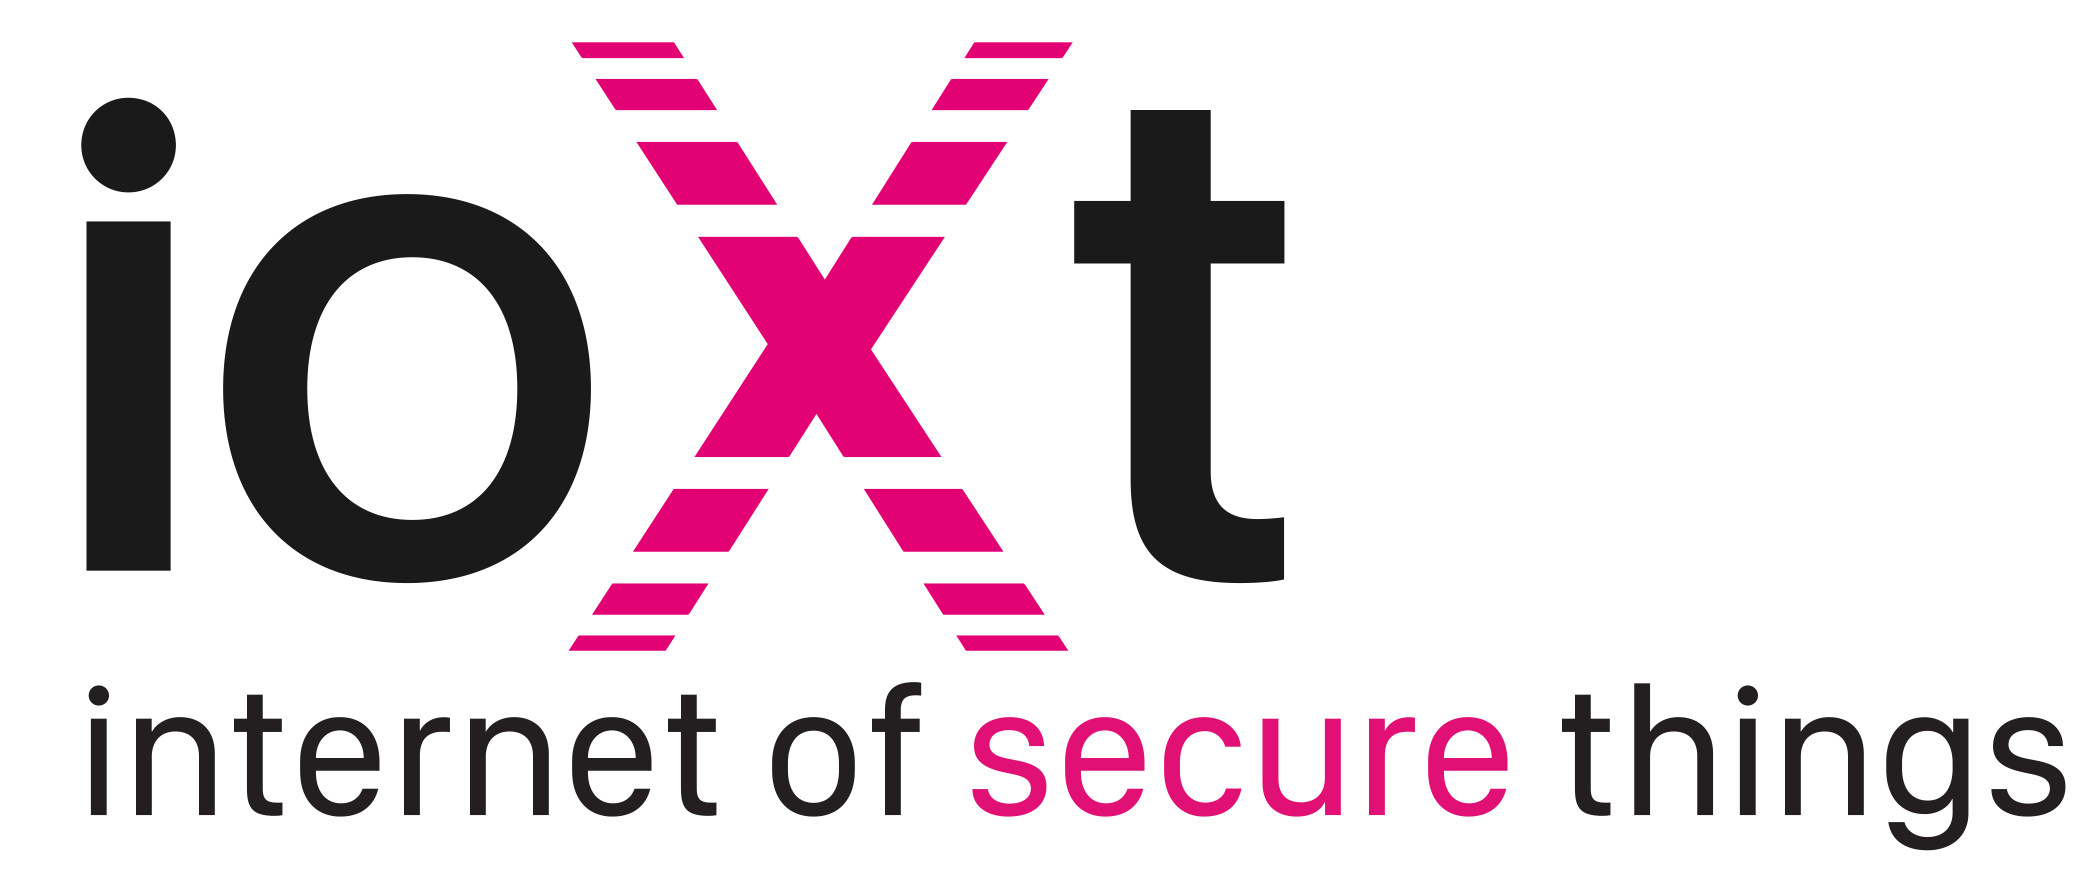 ioxt_logo_tagline-2020_